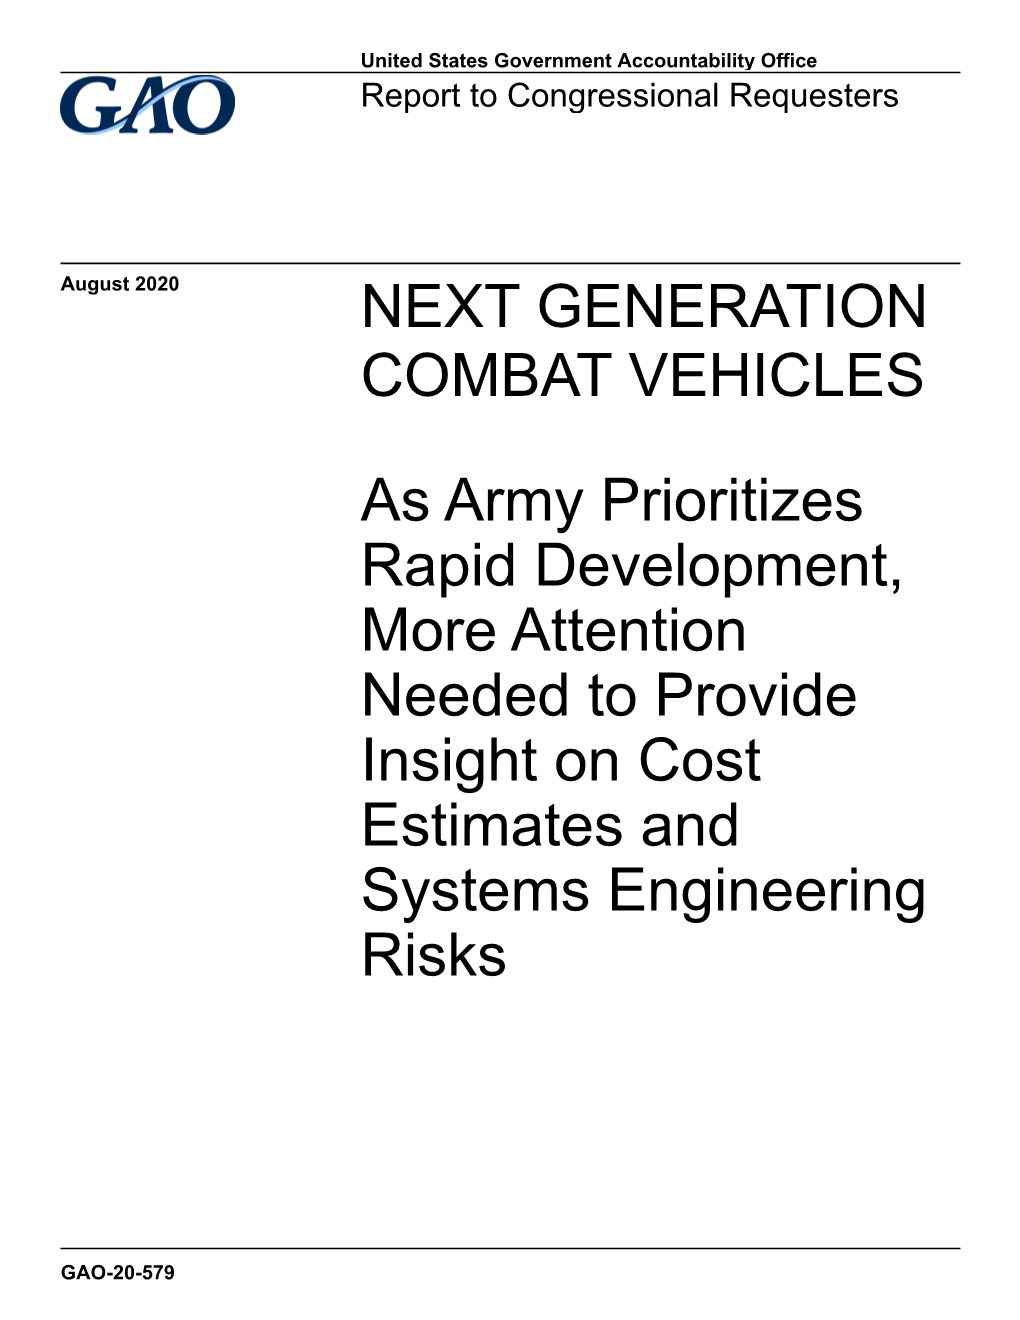 GAO-20-579, Next Generation Combat Vehicles